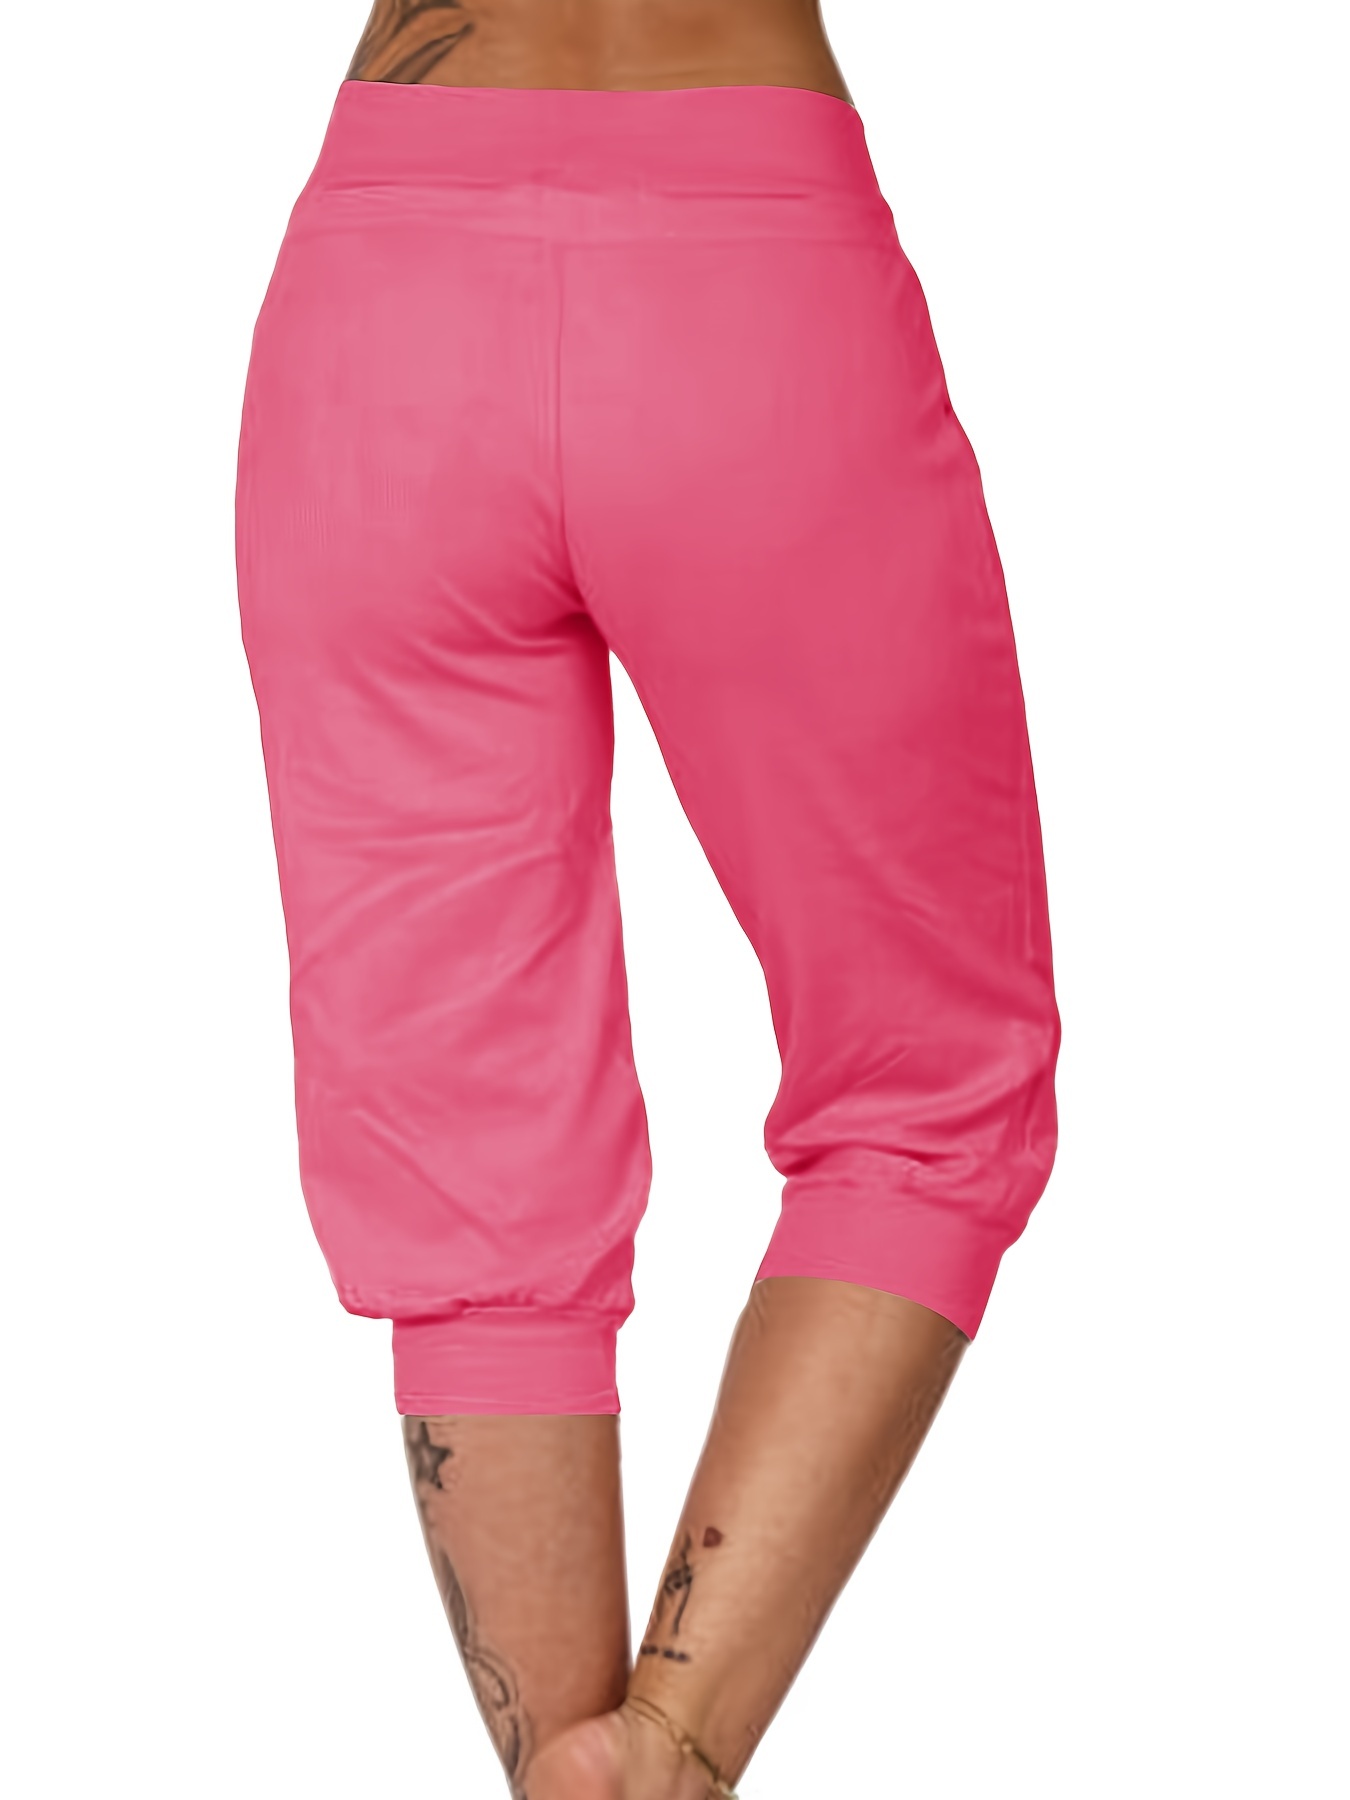 Buy PINKSHELL Plain Capri Colour Combos for Women Calf Length